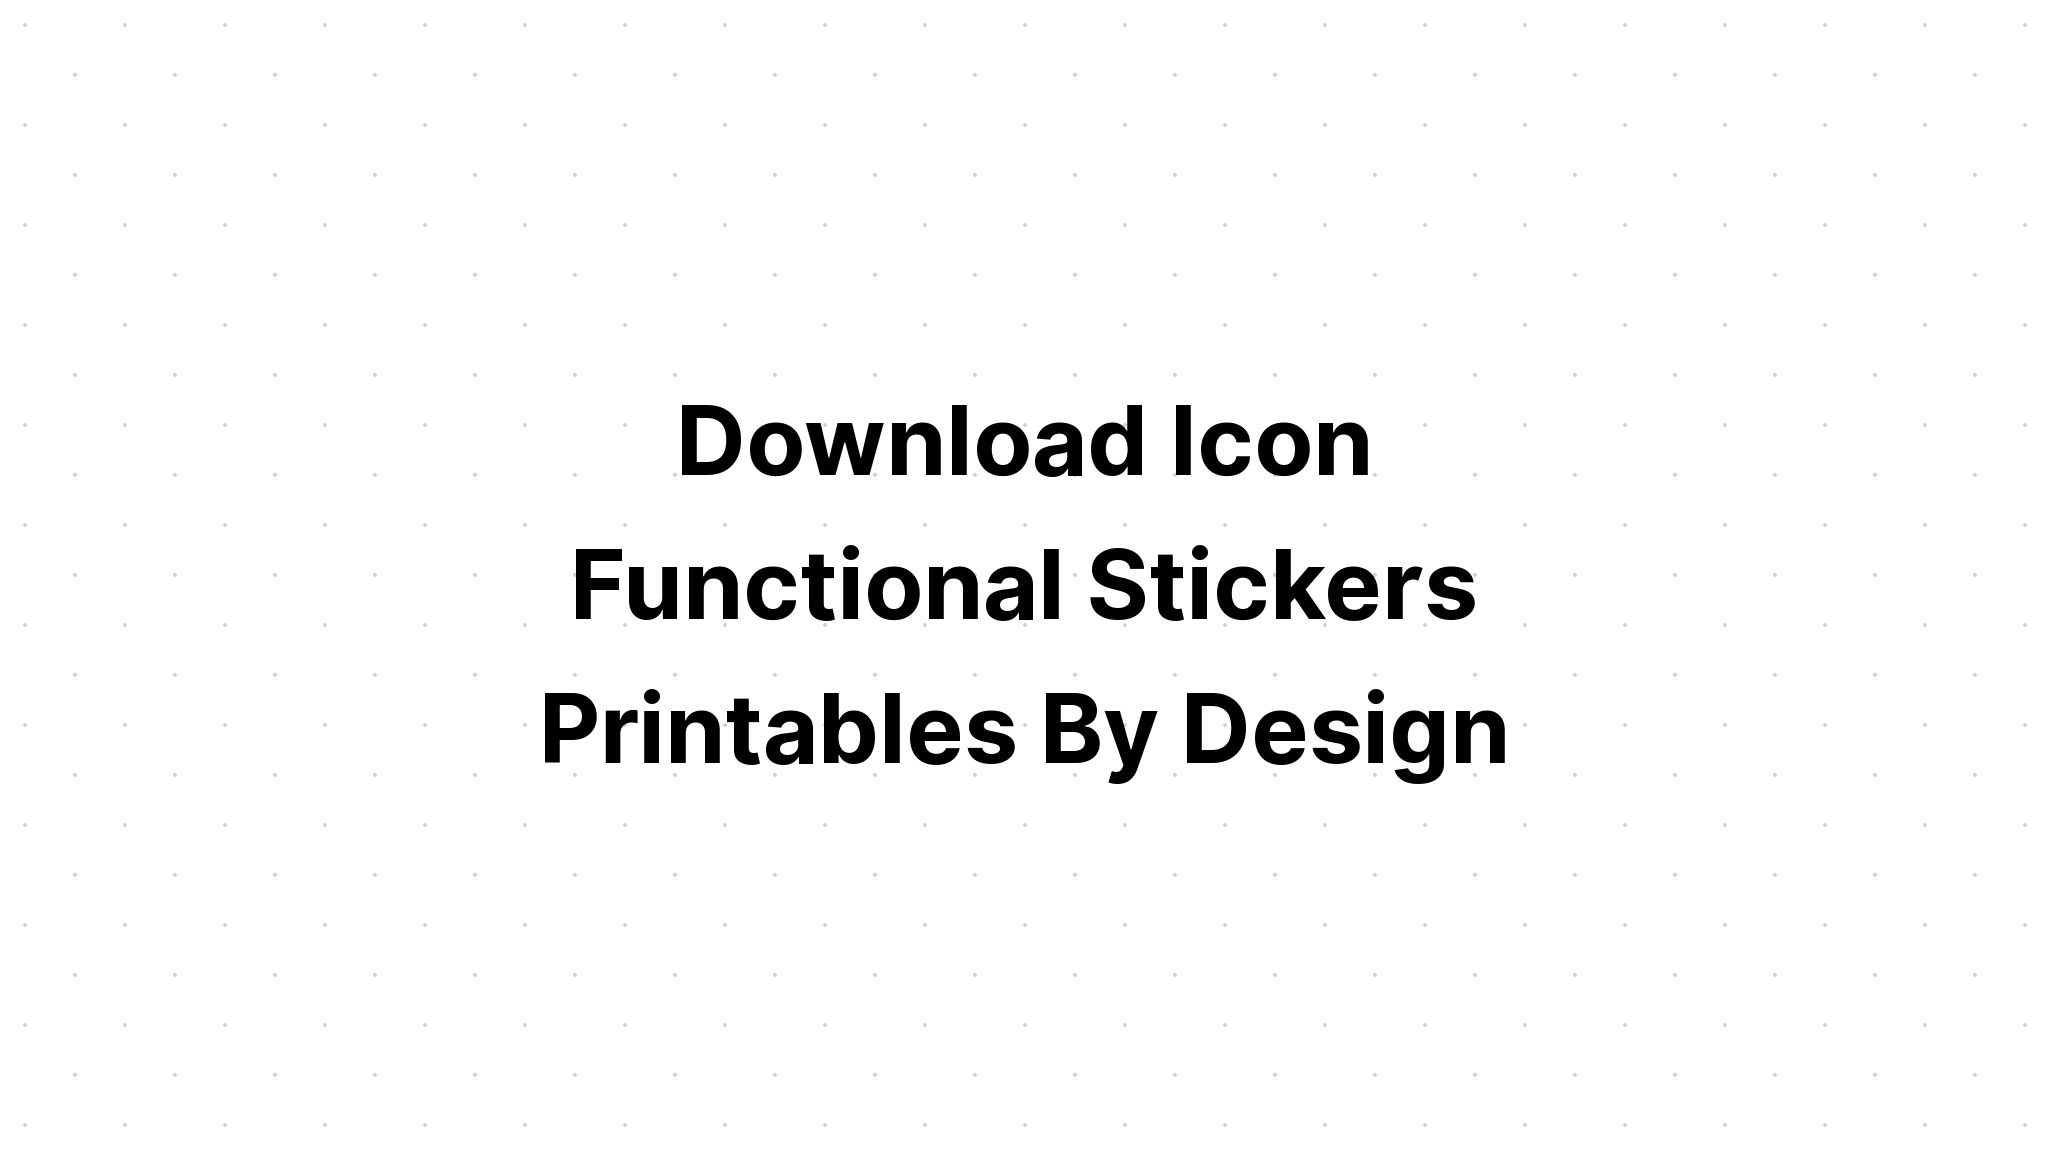 Download Tickmarkcheckmark Icons Planner Sticker SVG File